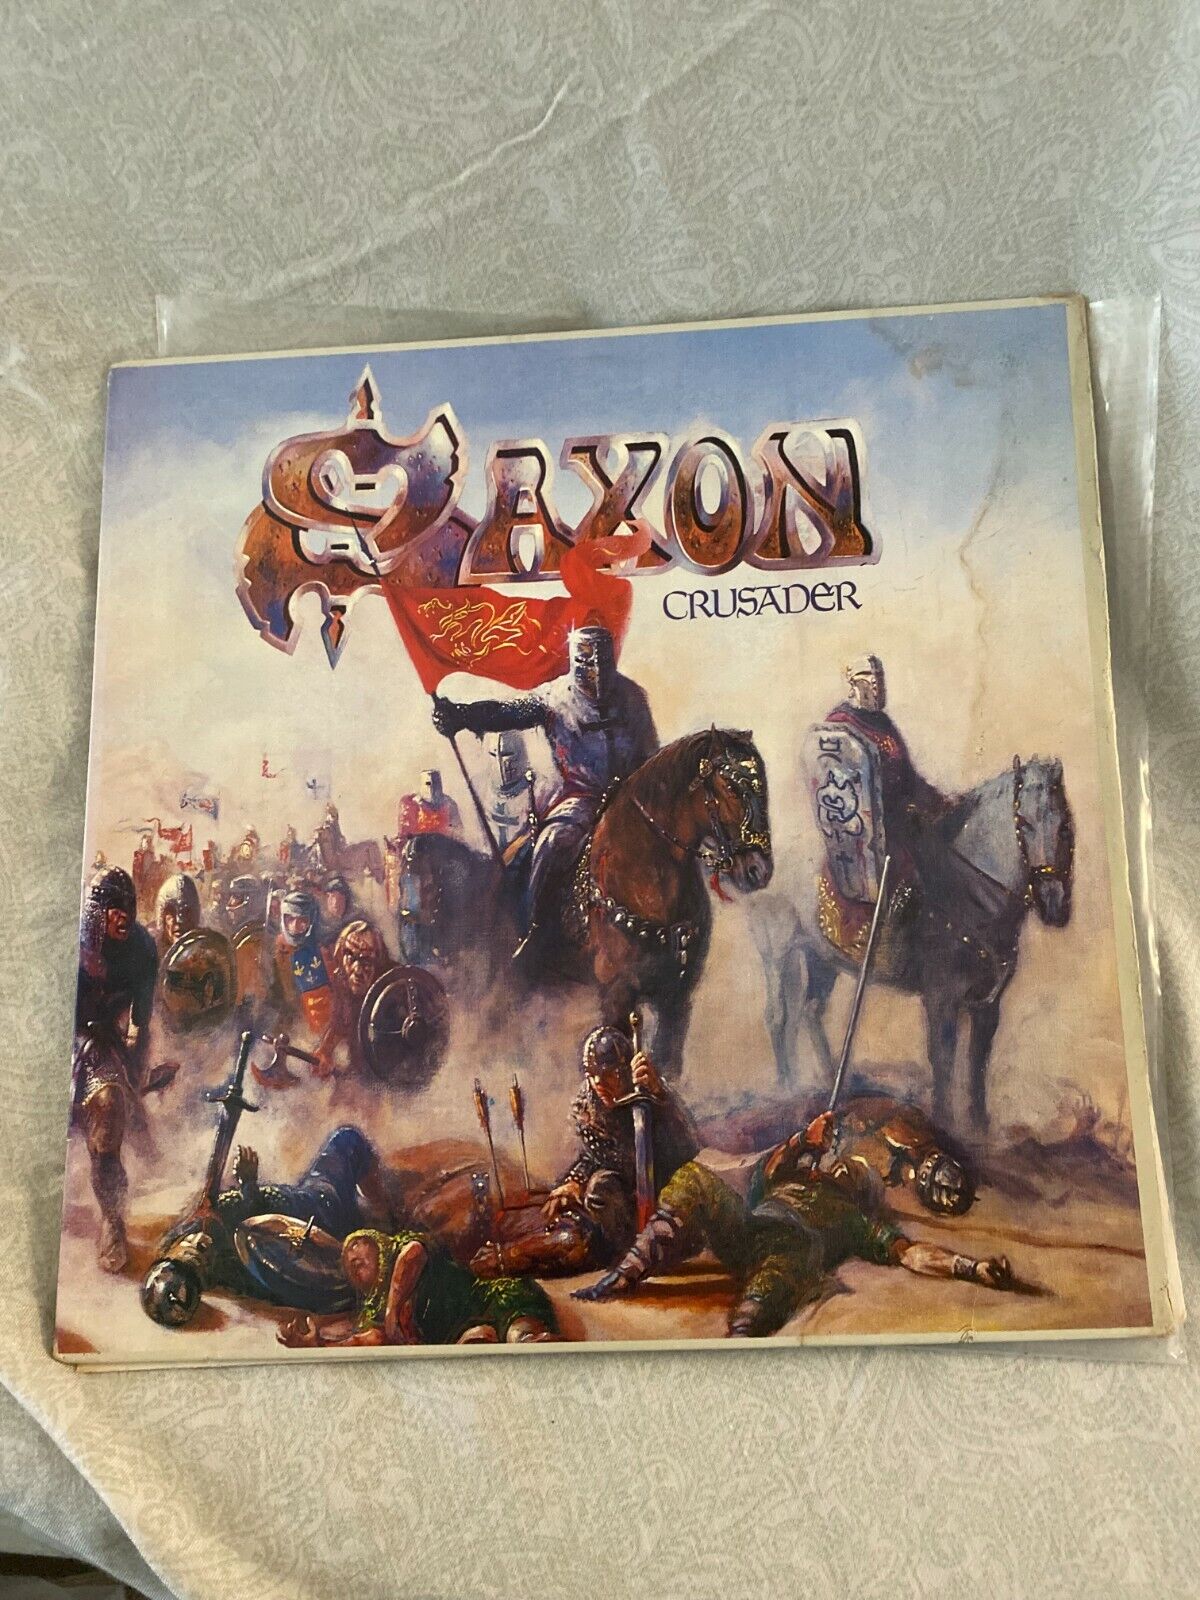 Saxon *Crusader *LP record vinyl *1984 *Carrere *VG+/G+ *BFZ39284 *1984 *METAL